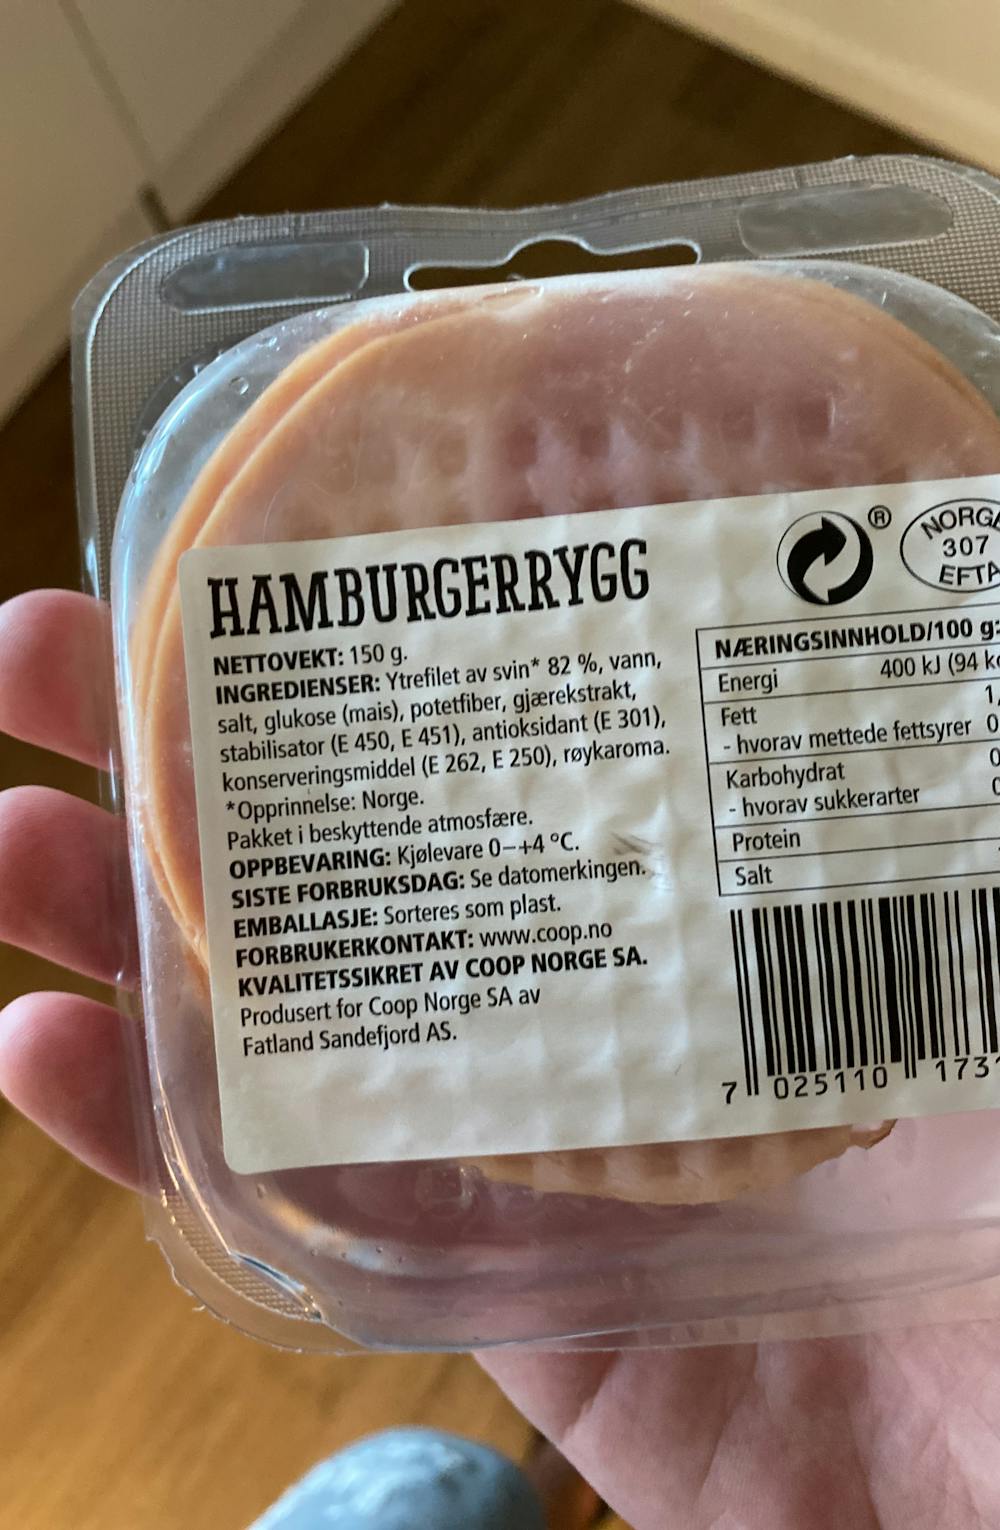 Ingredienslisten til Hamburgerrygg, Coop